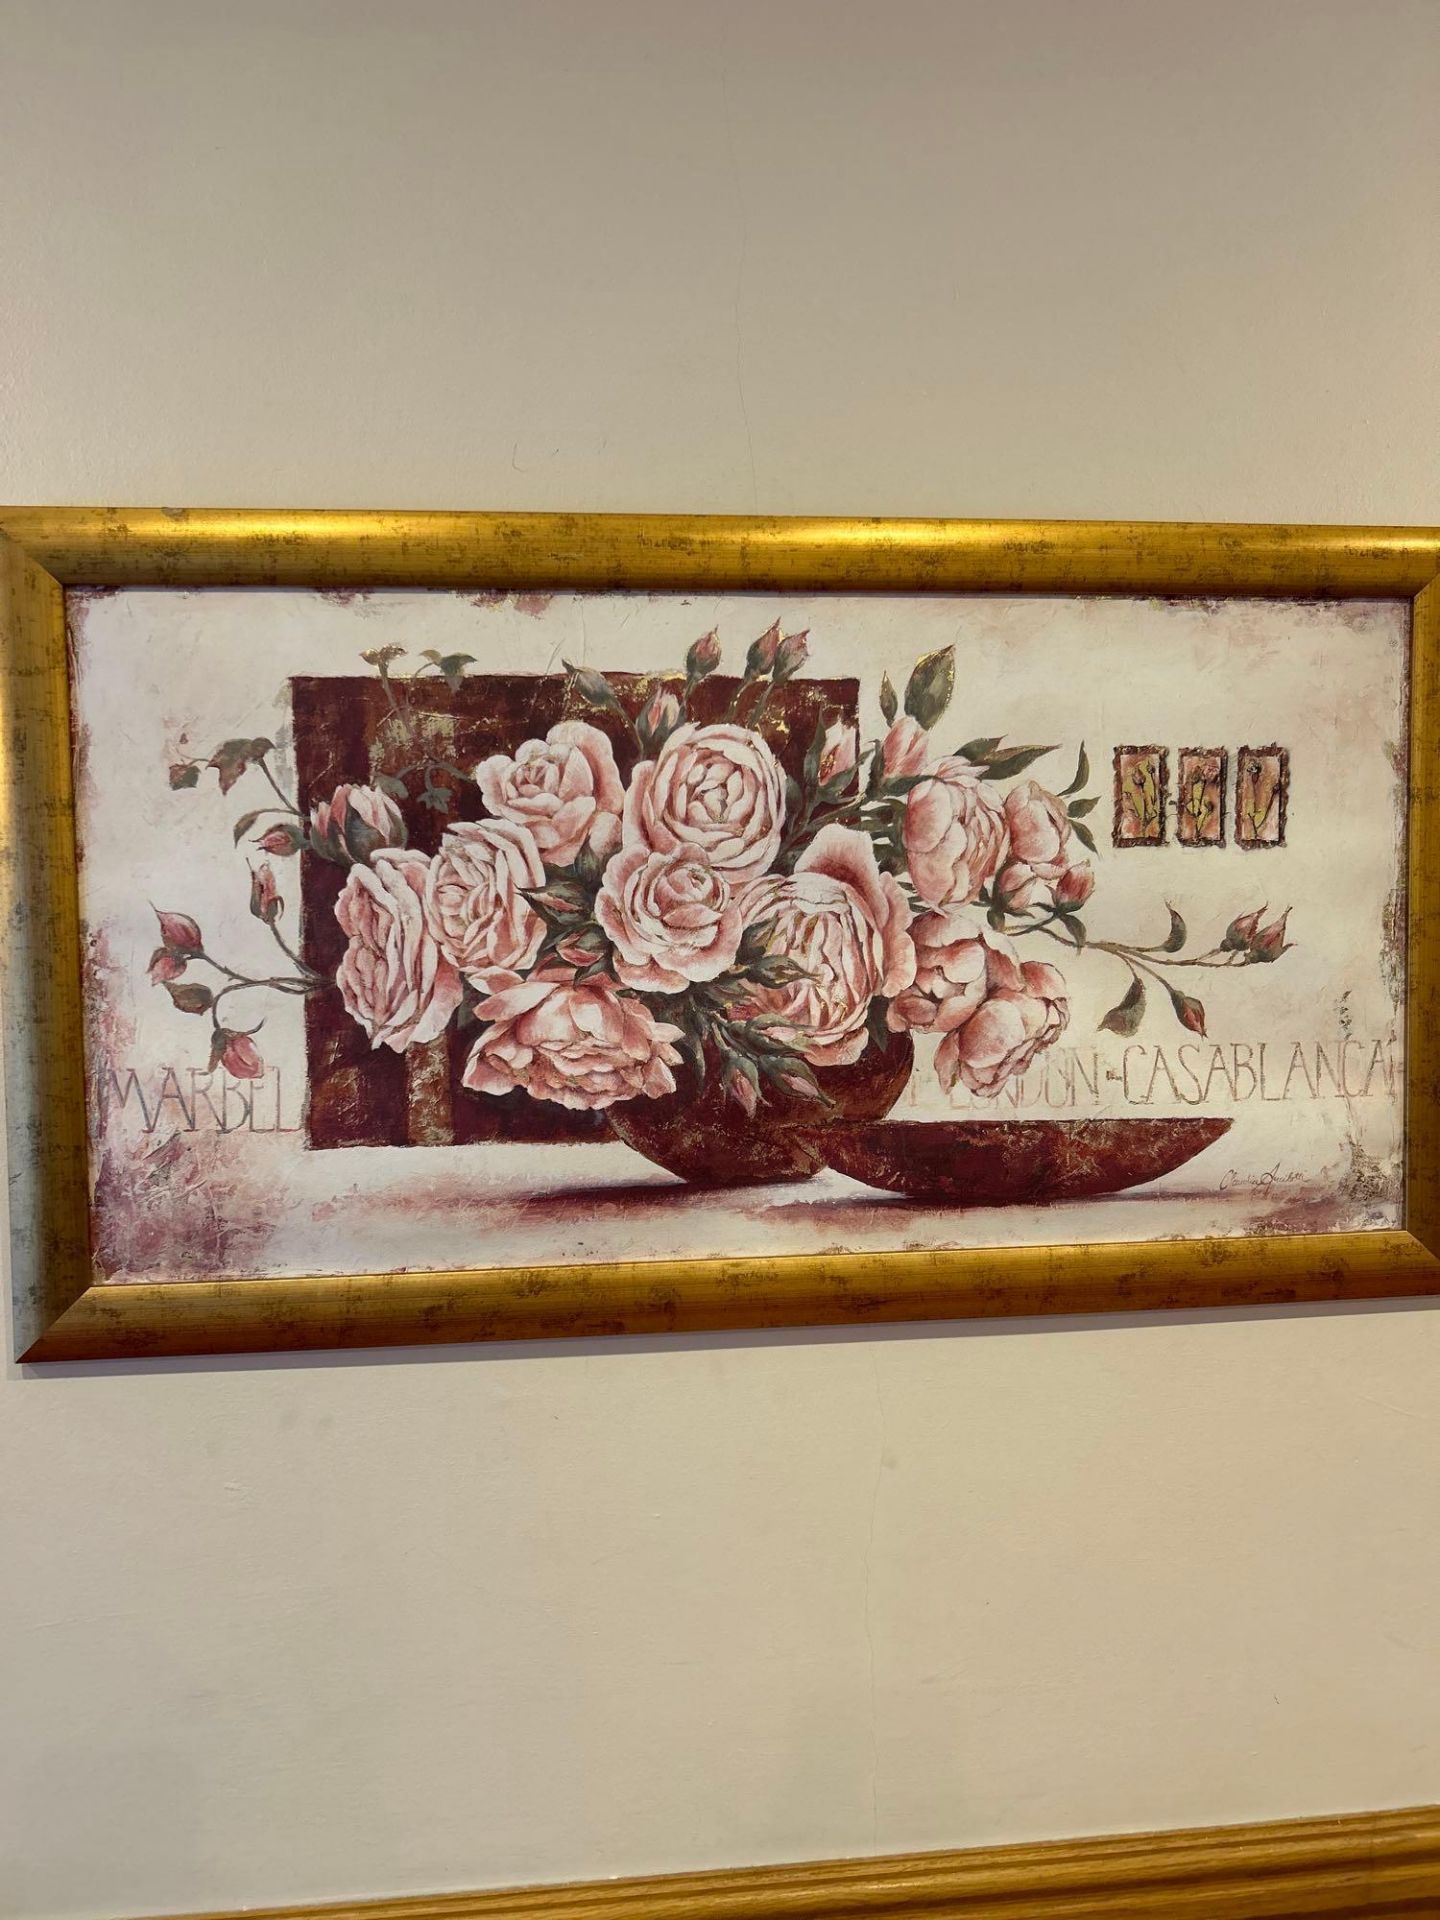 Print of flowers on canvas 1100*600 (Meeting Room - Slipper Room) - Image 2 of 3